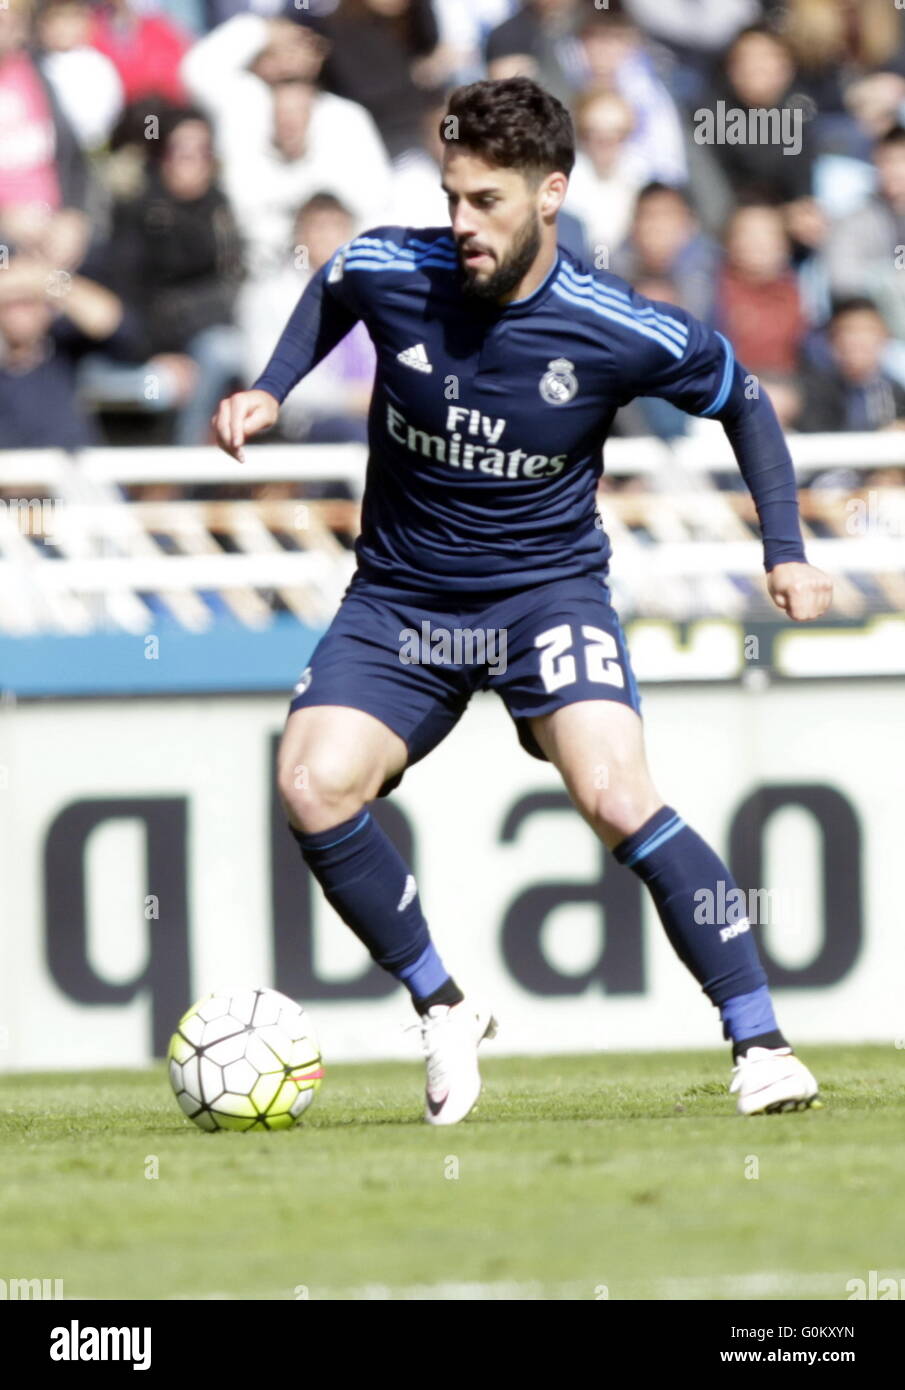 Isco of Real Madrid during the La Liga match espagolde Real Sociedad - Real Madrid at the Anoeta Stadium Stock Photo